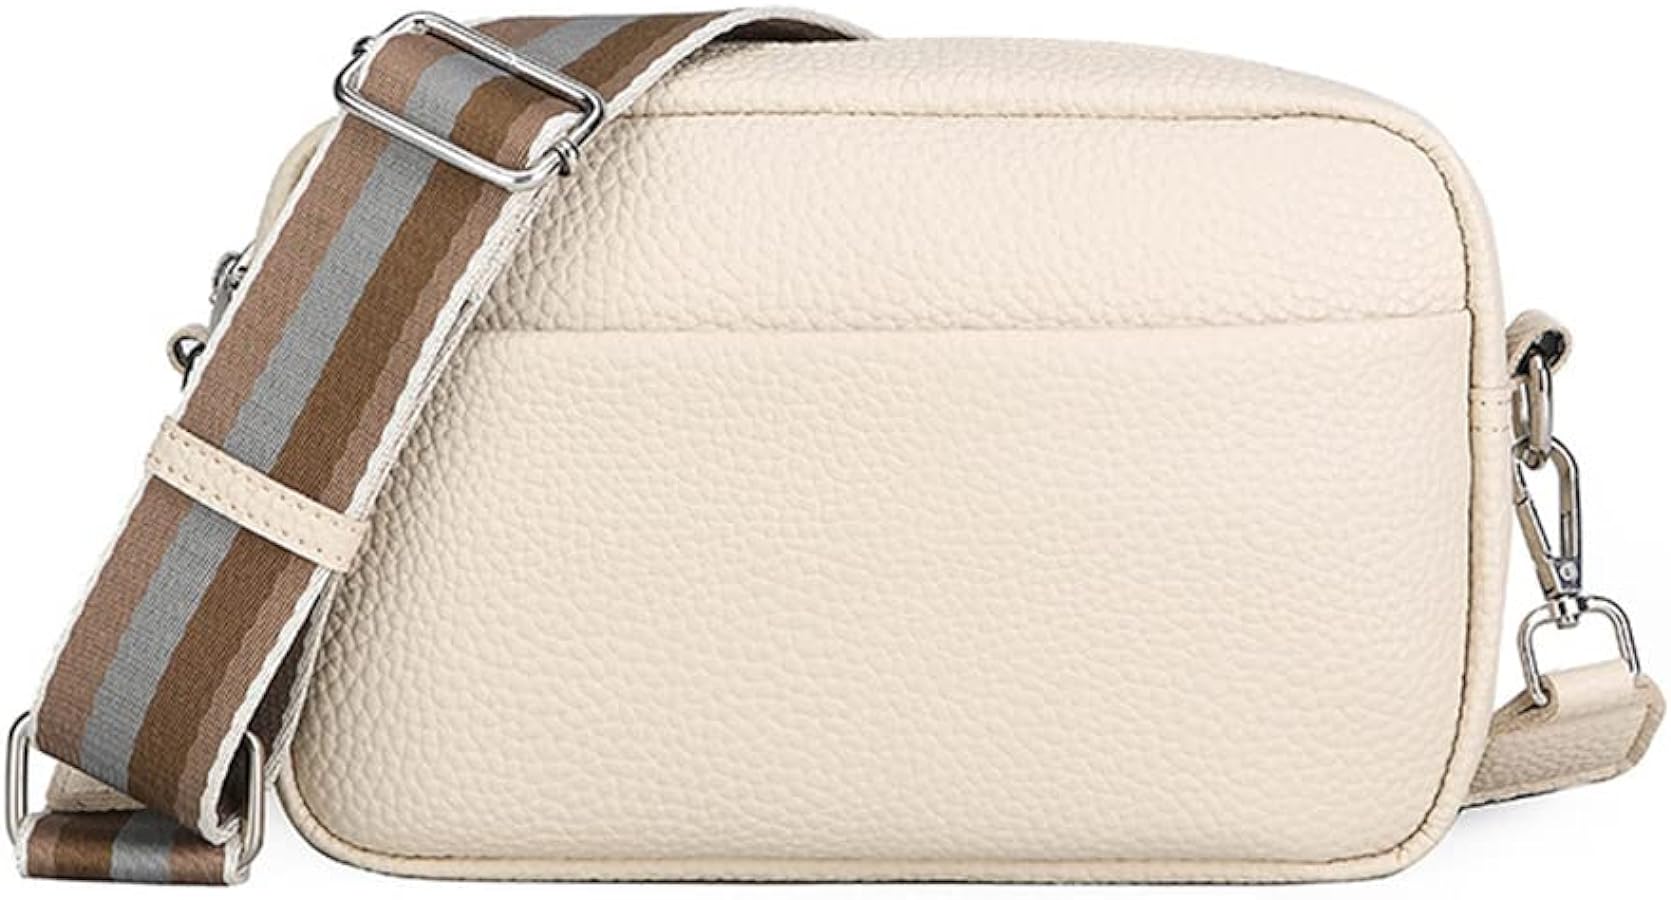 Women’s leather crossbody bag – Shoulder Bags That Look Good